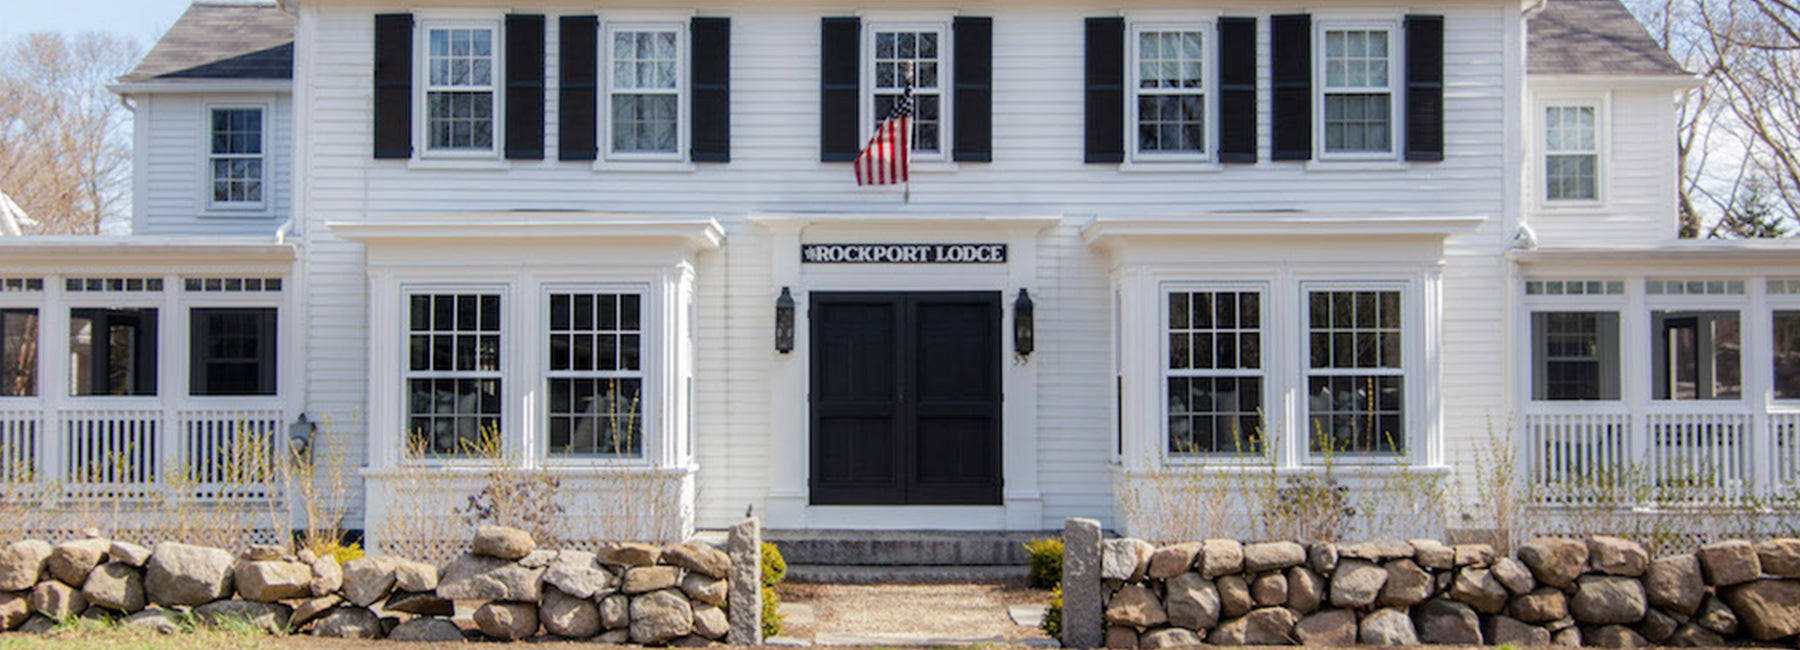 The Rockport Lodge